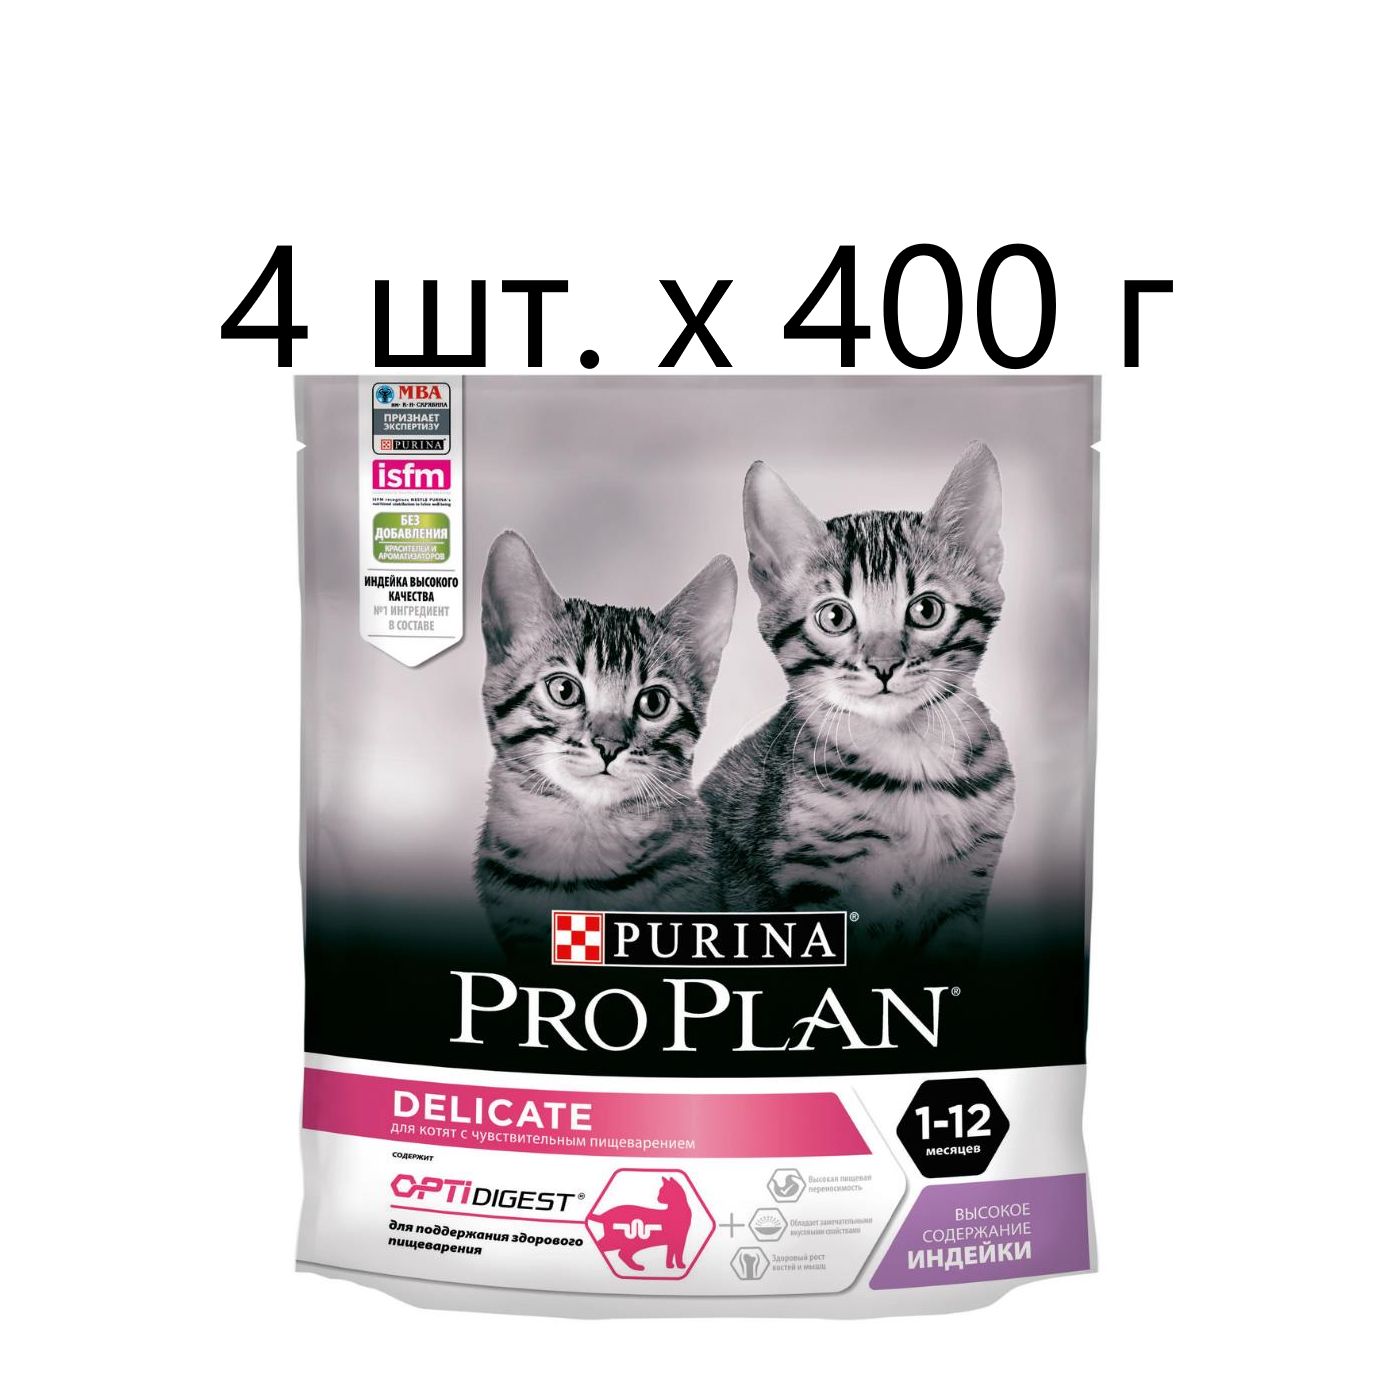 Purina pro plan для чувствительного пищеварения. Purina Pro Plan для котят. Проплан для котят сухой корм. Корм для котят Пурина Проплан сухой. Пурина про план корм для котят.